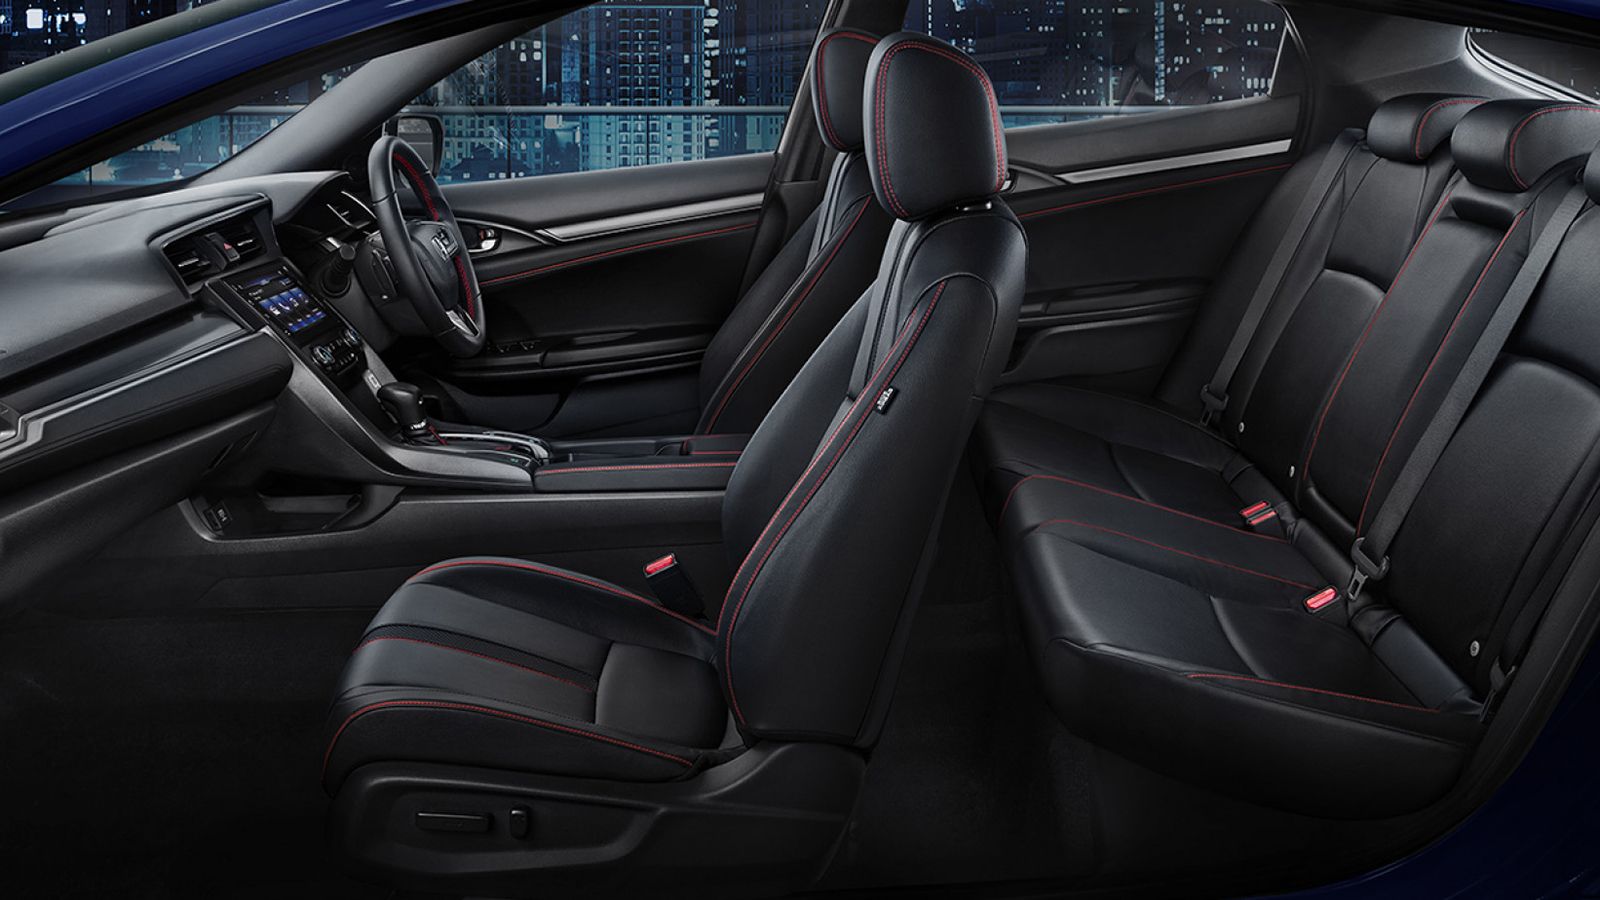 Honda Civic Hatchback 2019 Interior 003